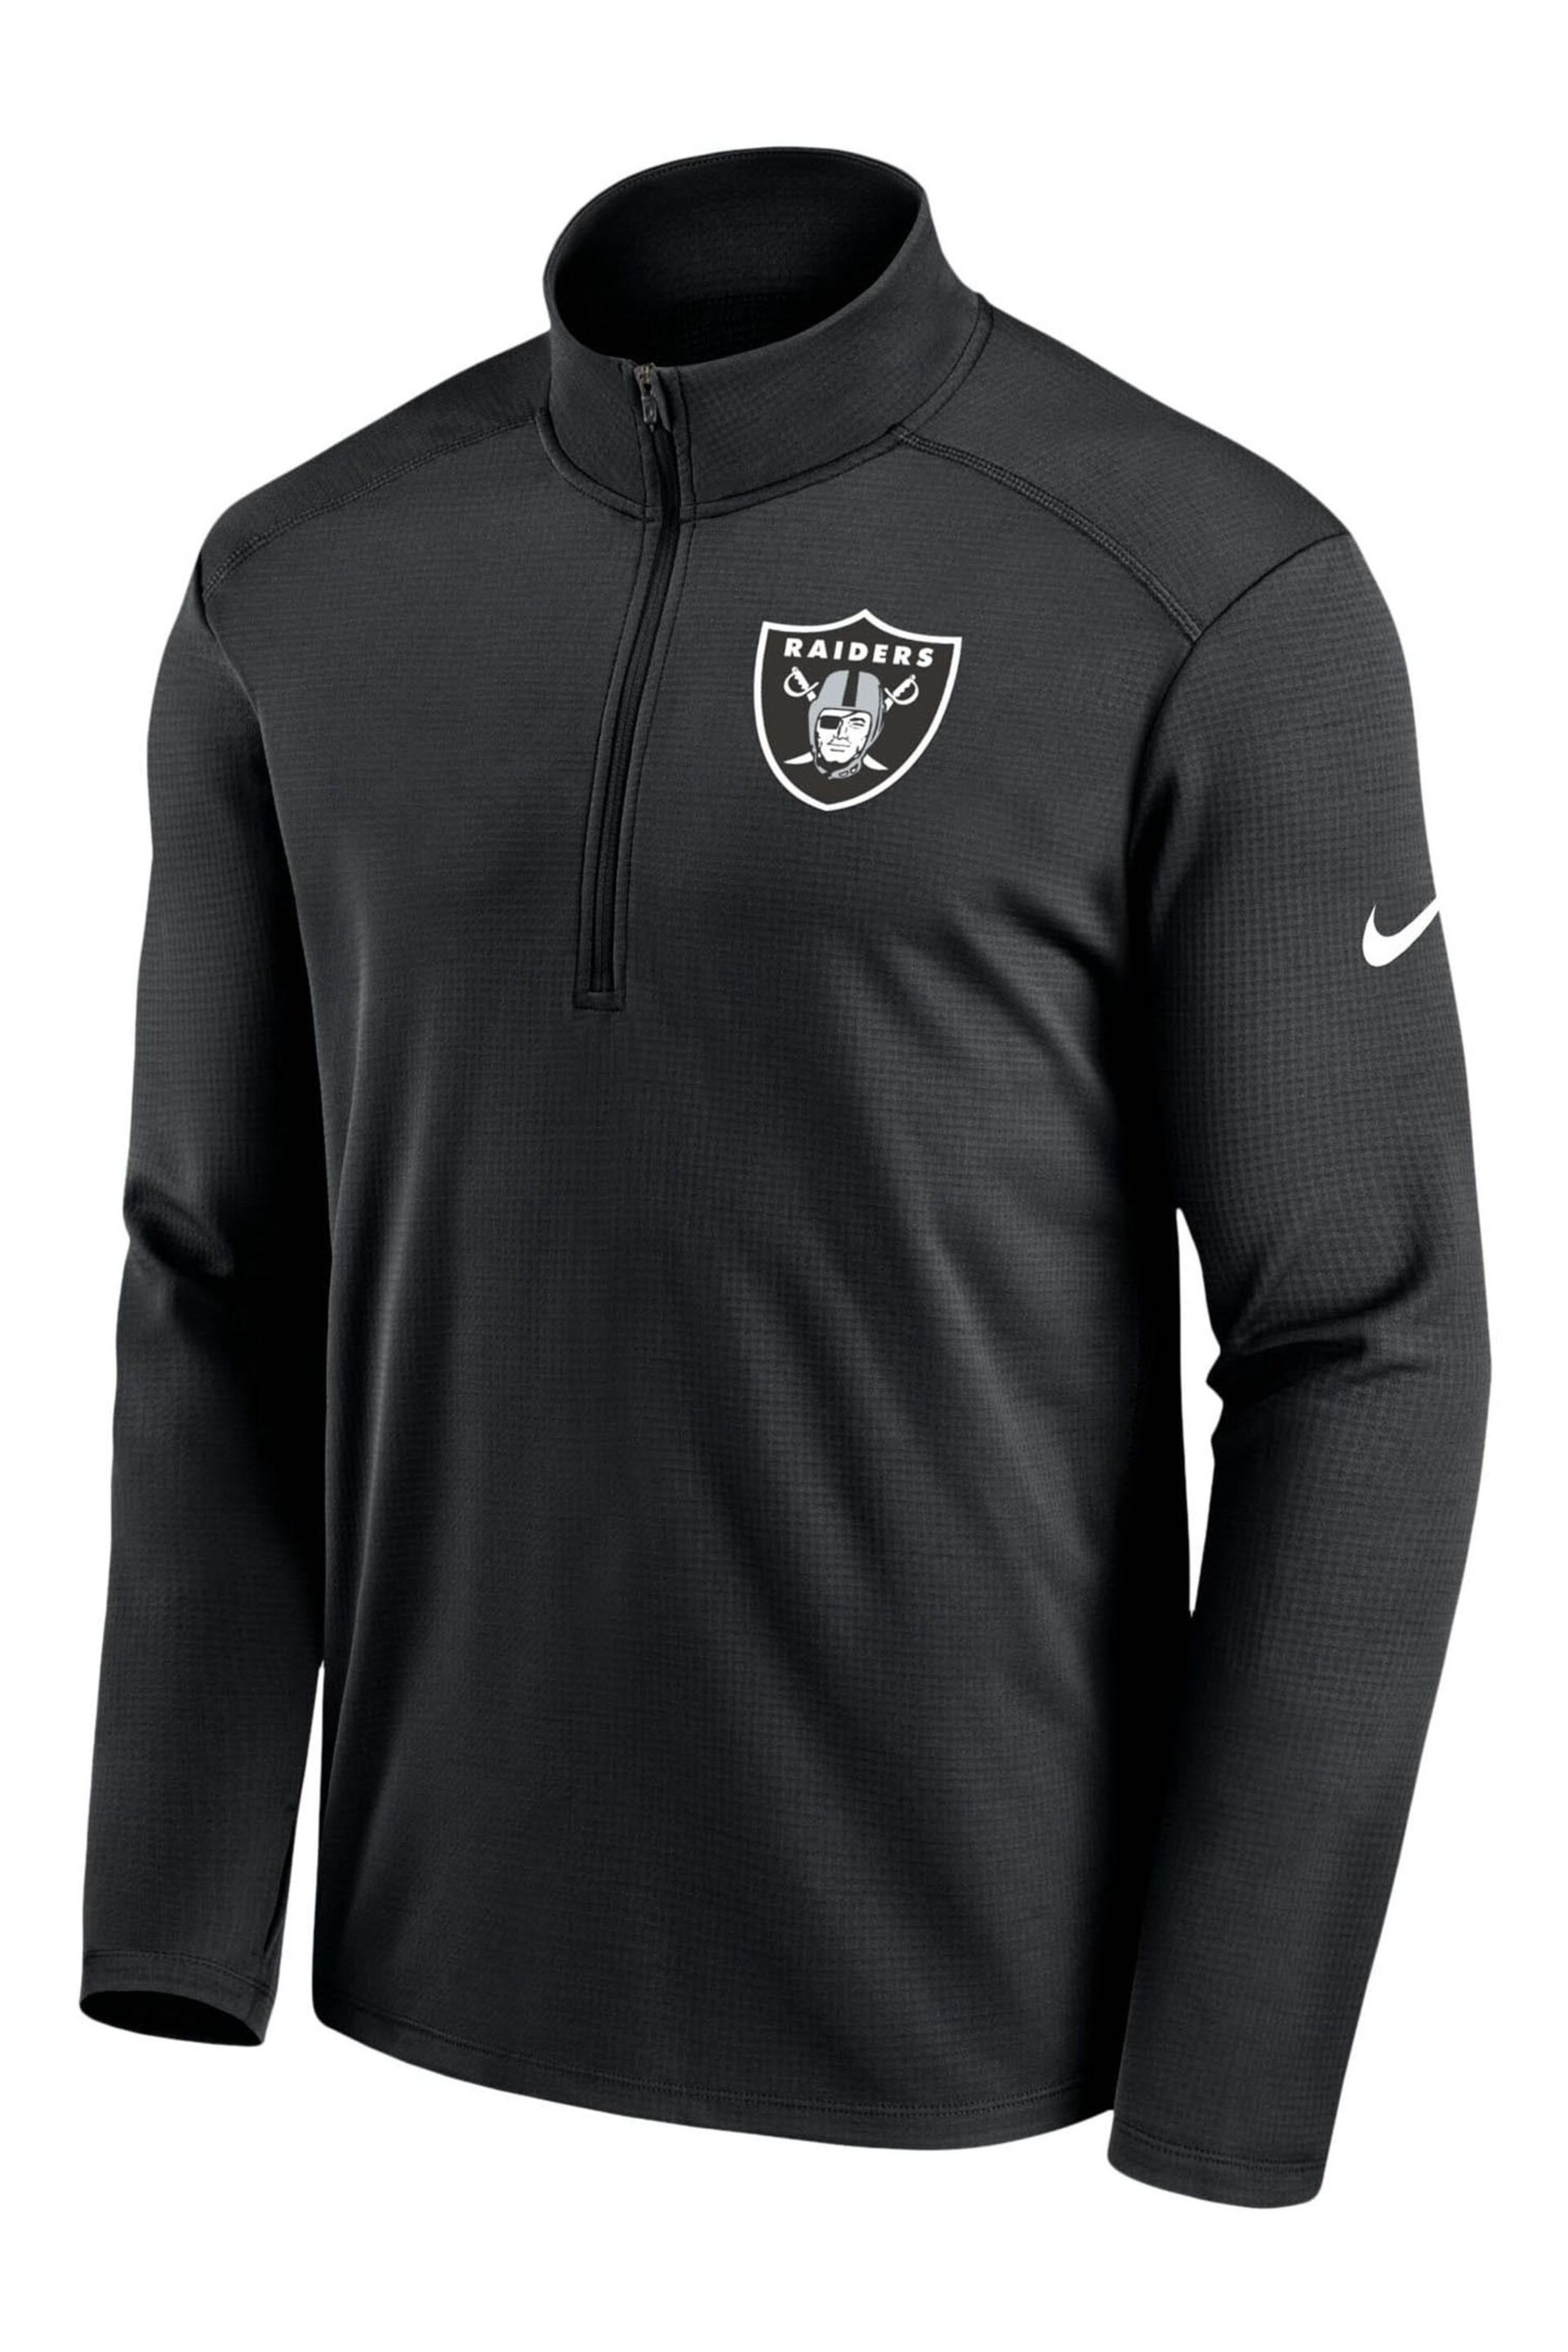 Nike Black NFL Fanatics Las Vegas Raiders Pacer Half Zip Jacket - Image 2 of 3